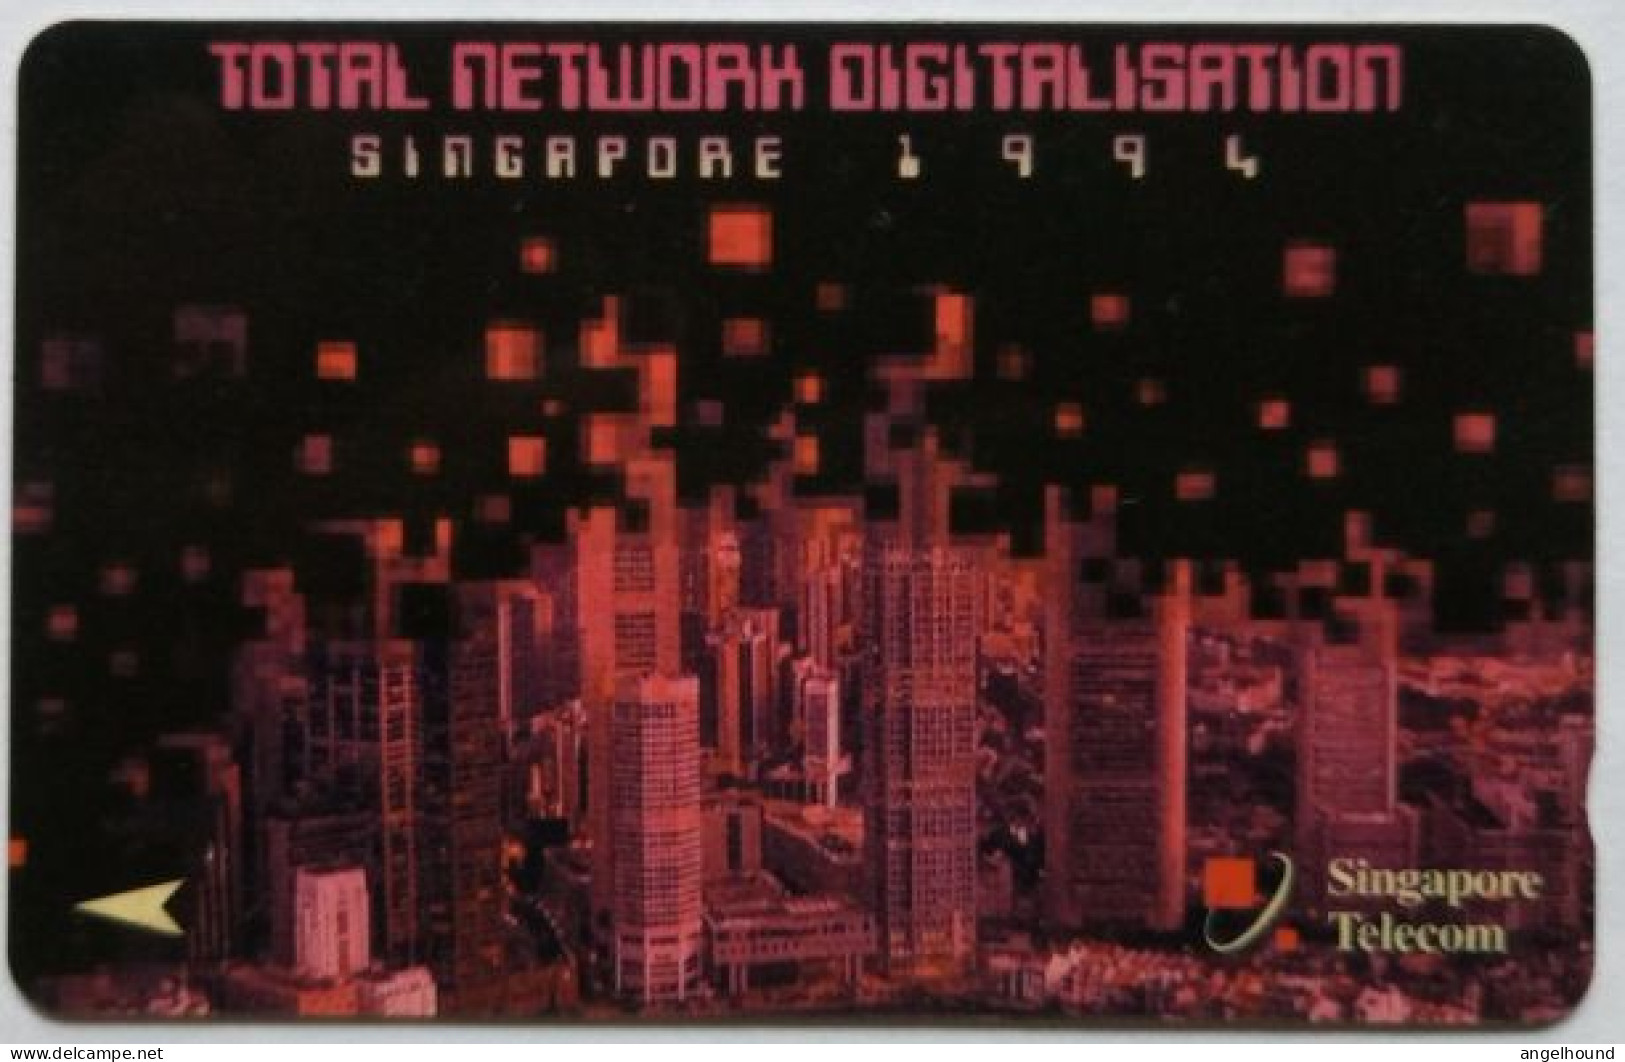 Singapore  $3  GPT  1SNDB - Total Network Digitalisation Singfapore 1994 - Singapur